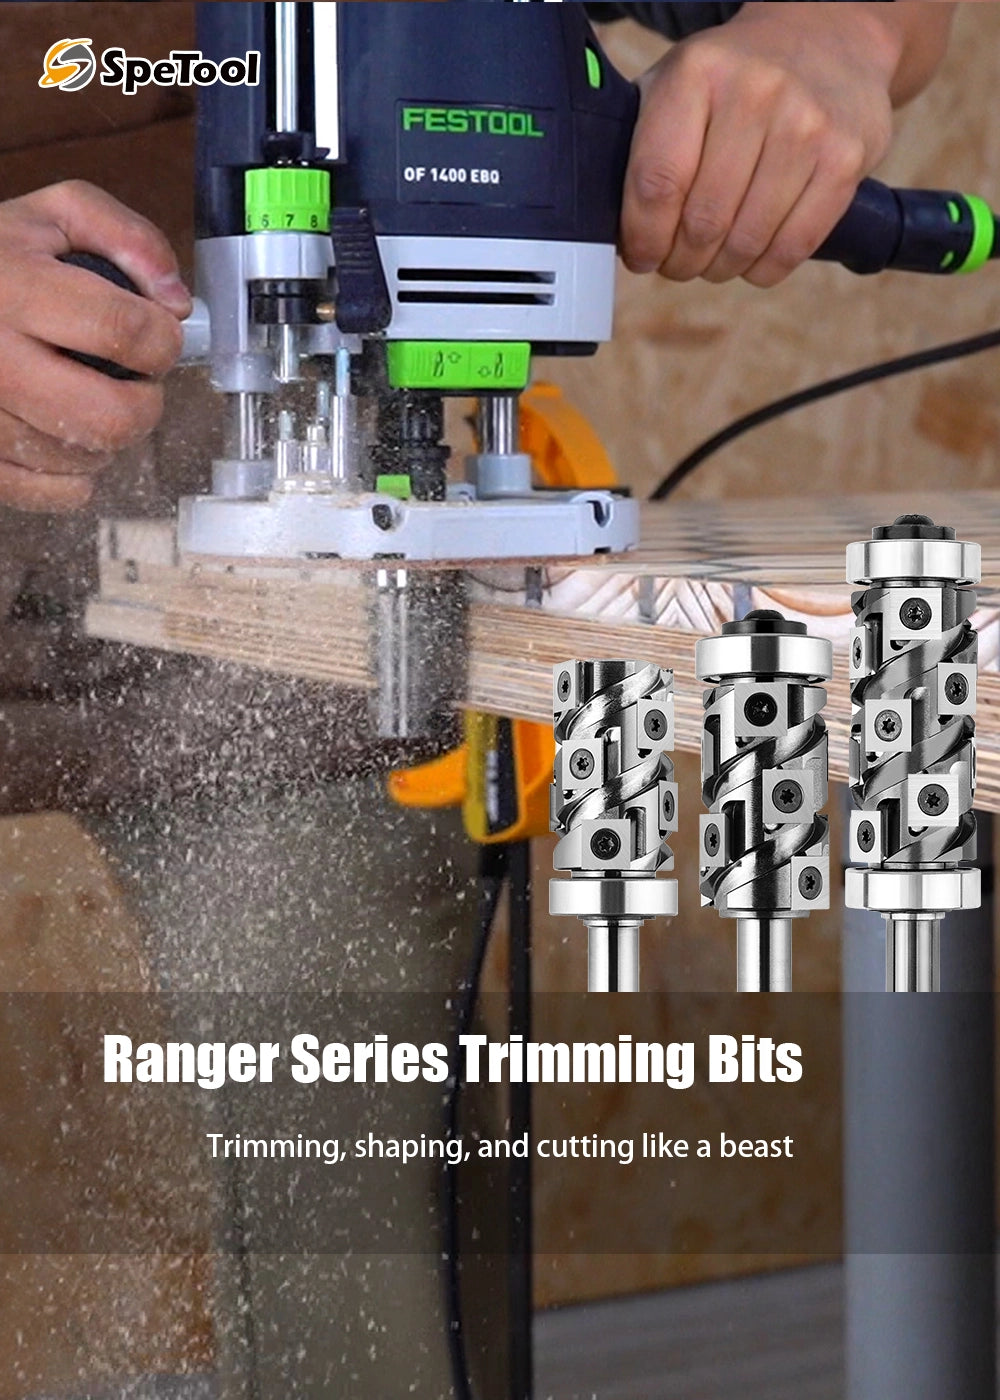 SpeTool ranger series trimming bits